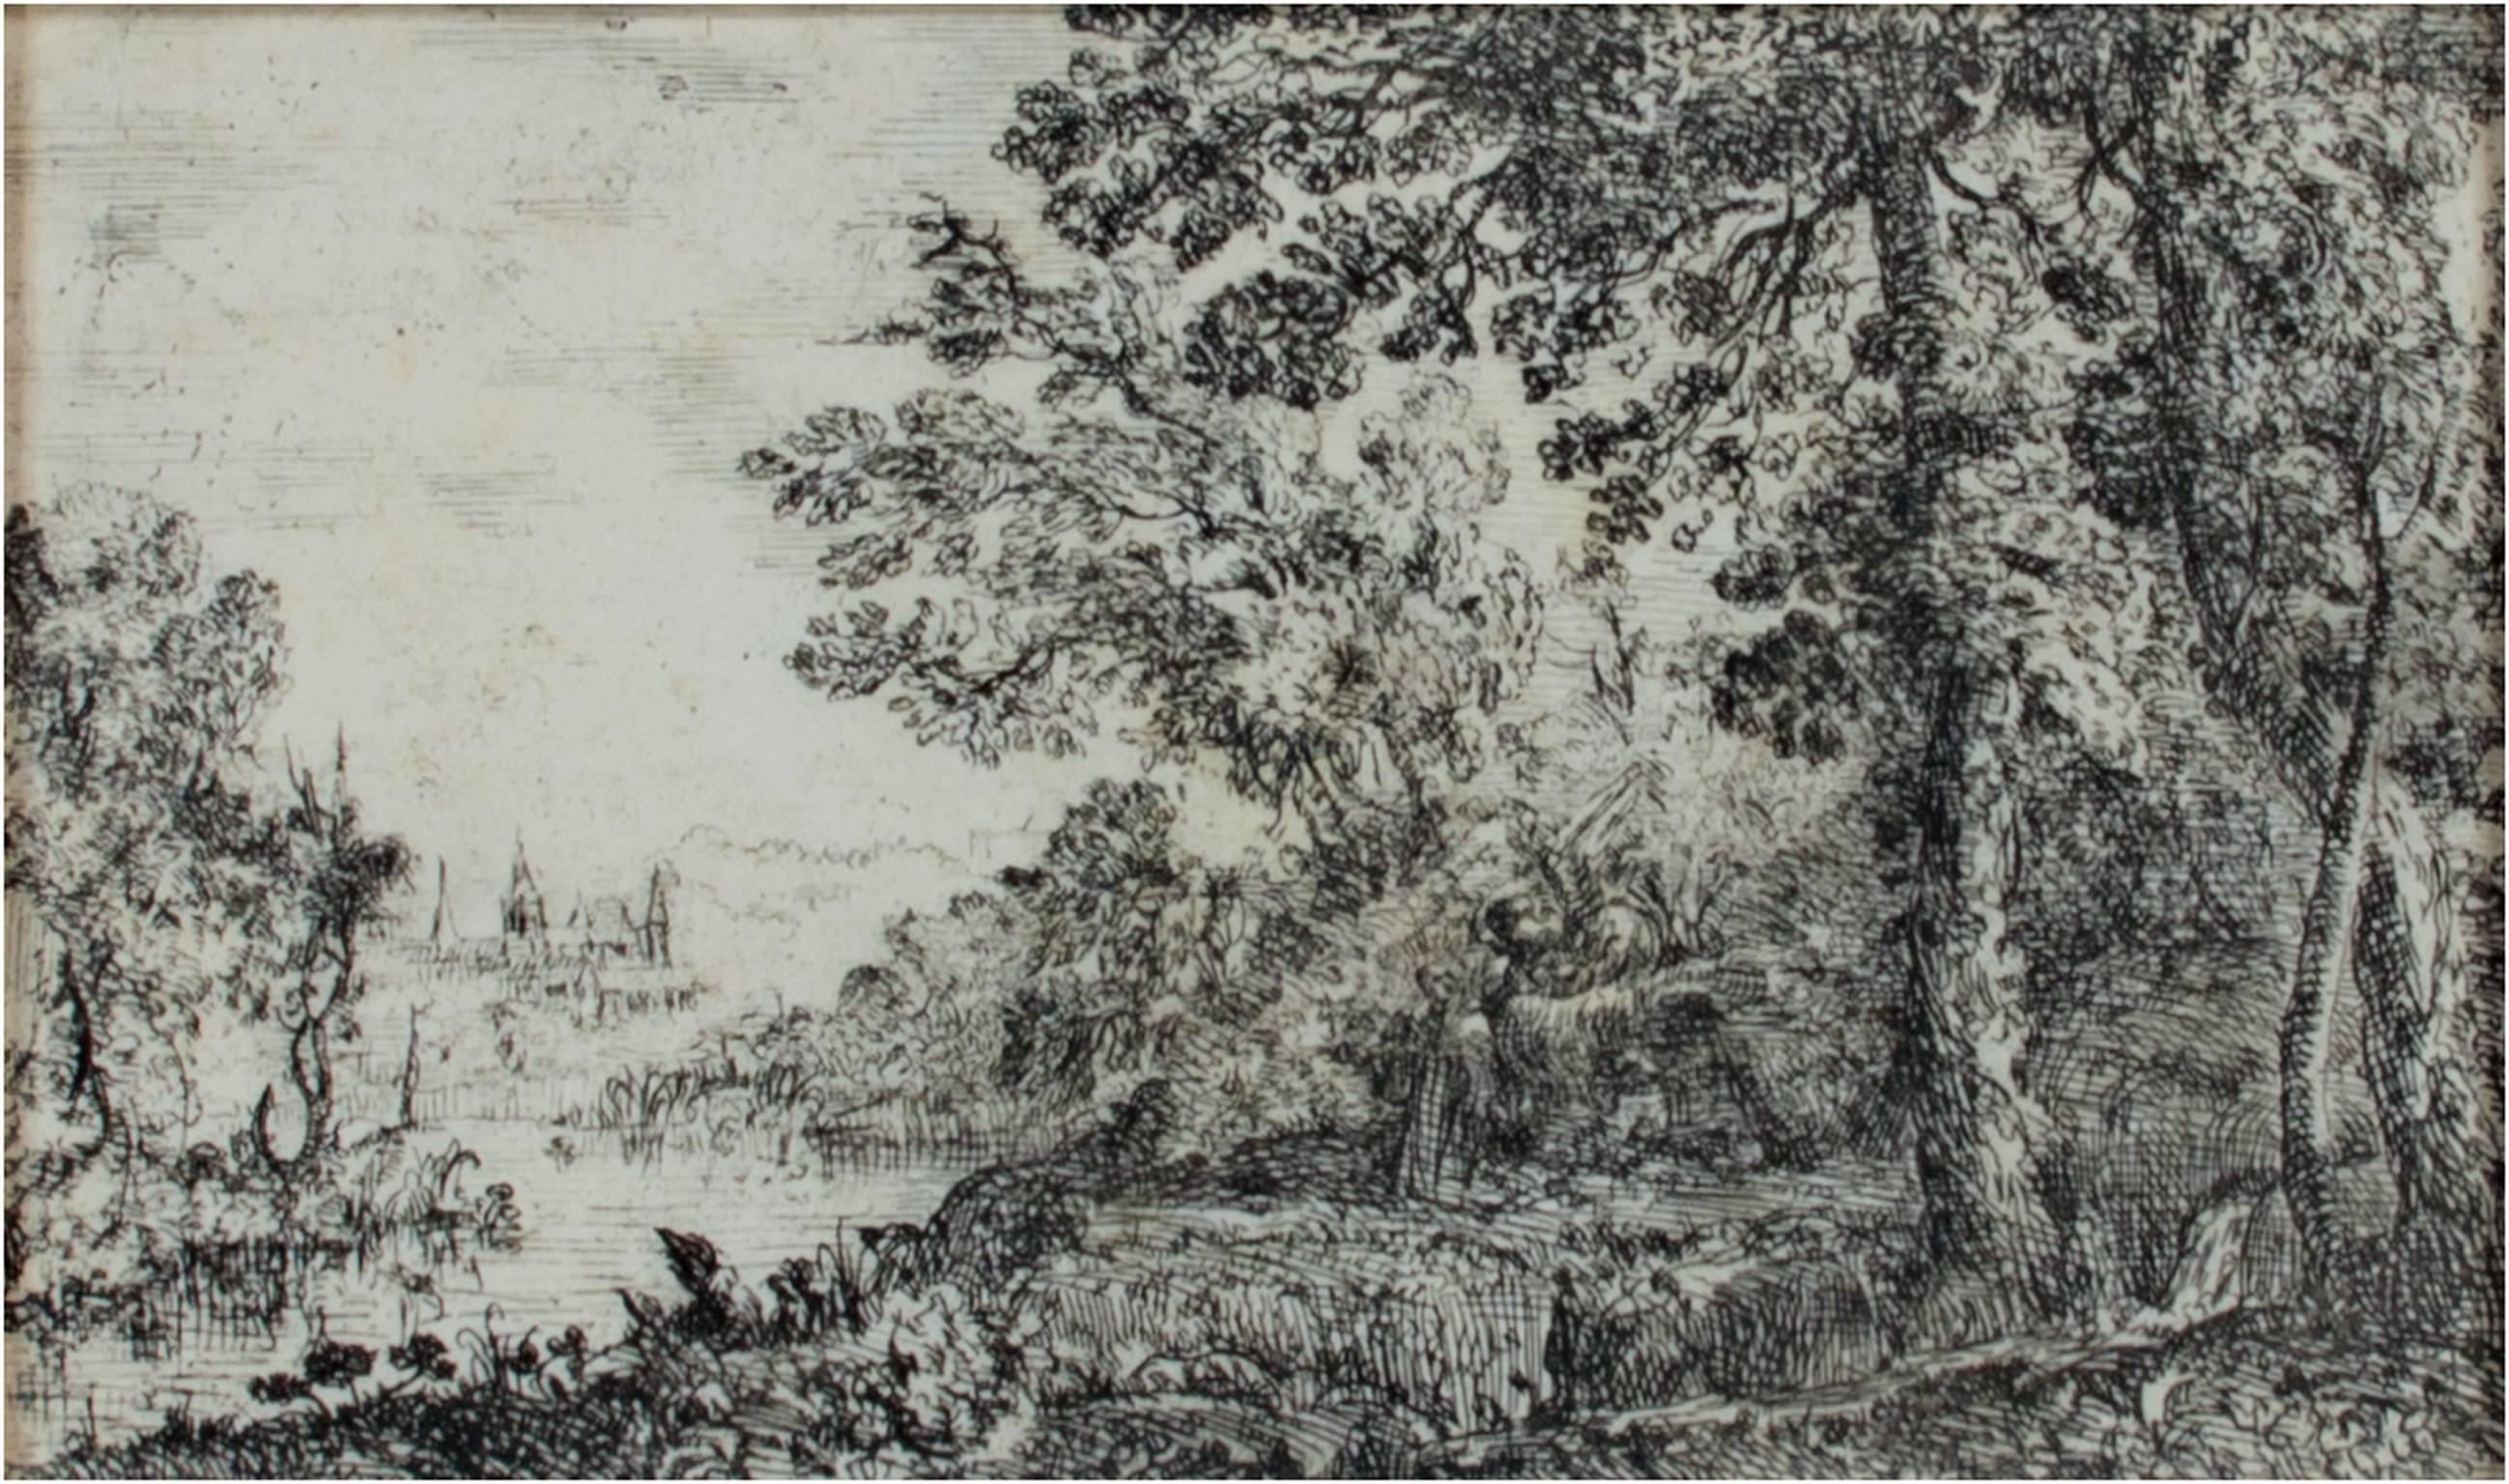 Claude Lorrain Landscape Print - 17th century etching black and white landscape forest trees river scene